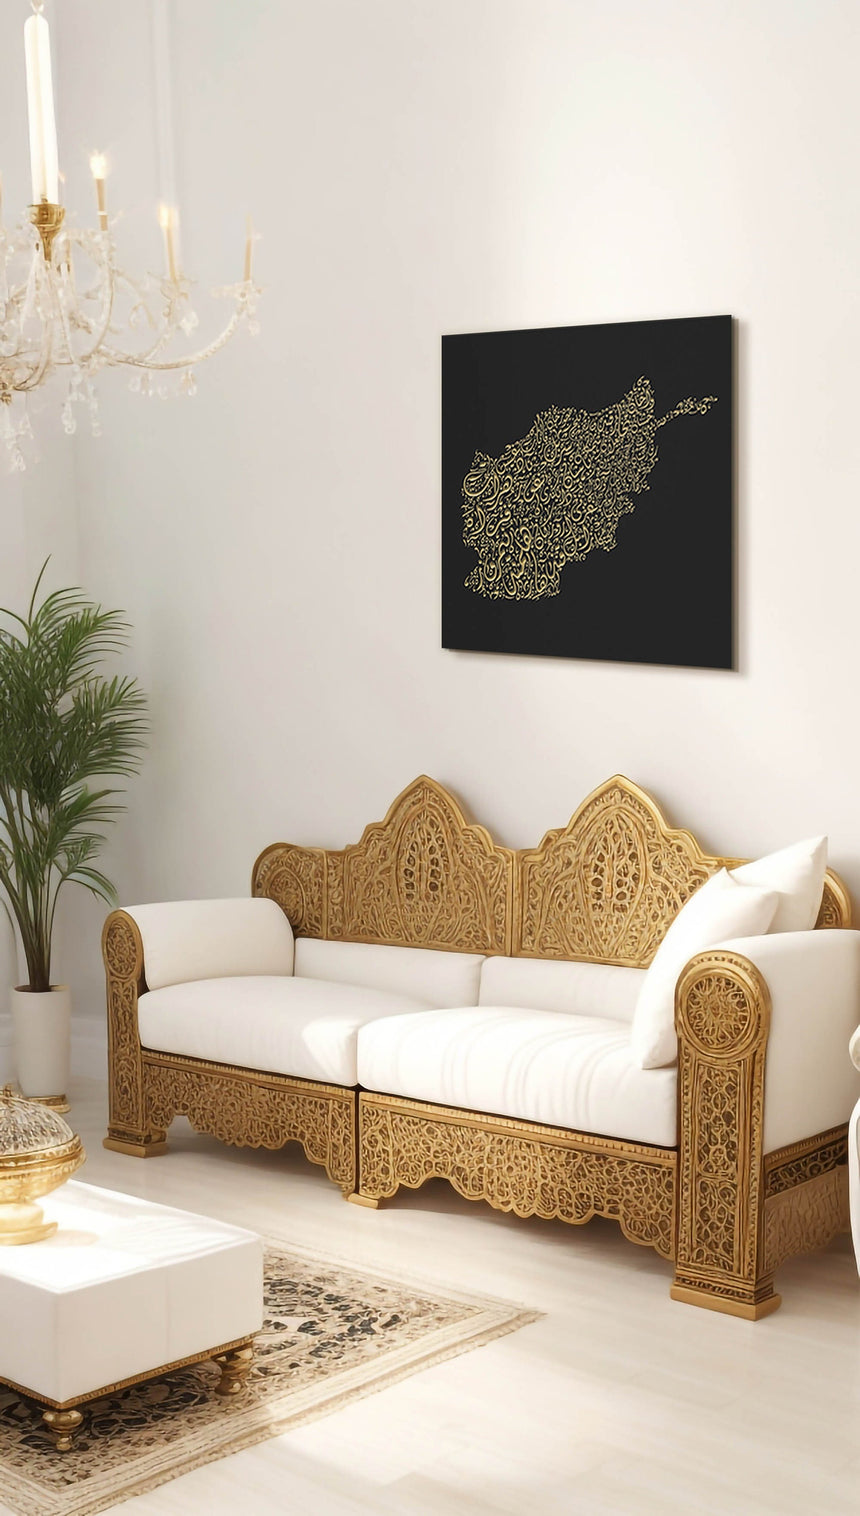 Afghanistan Map: black background, gold carving